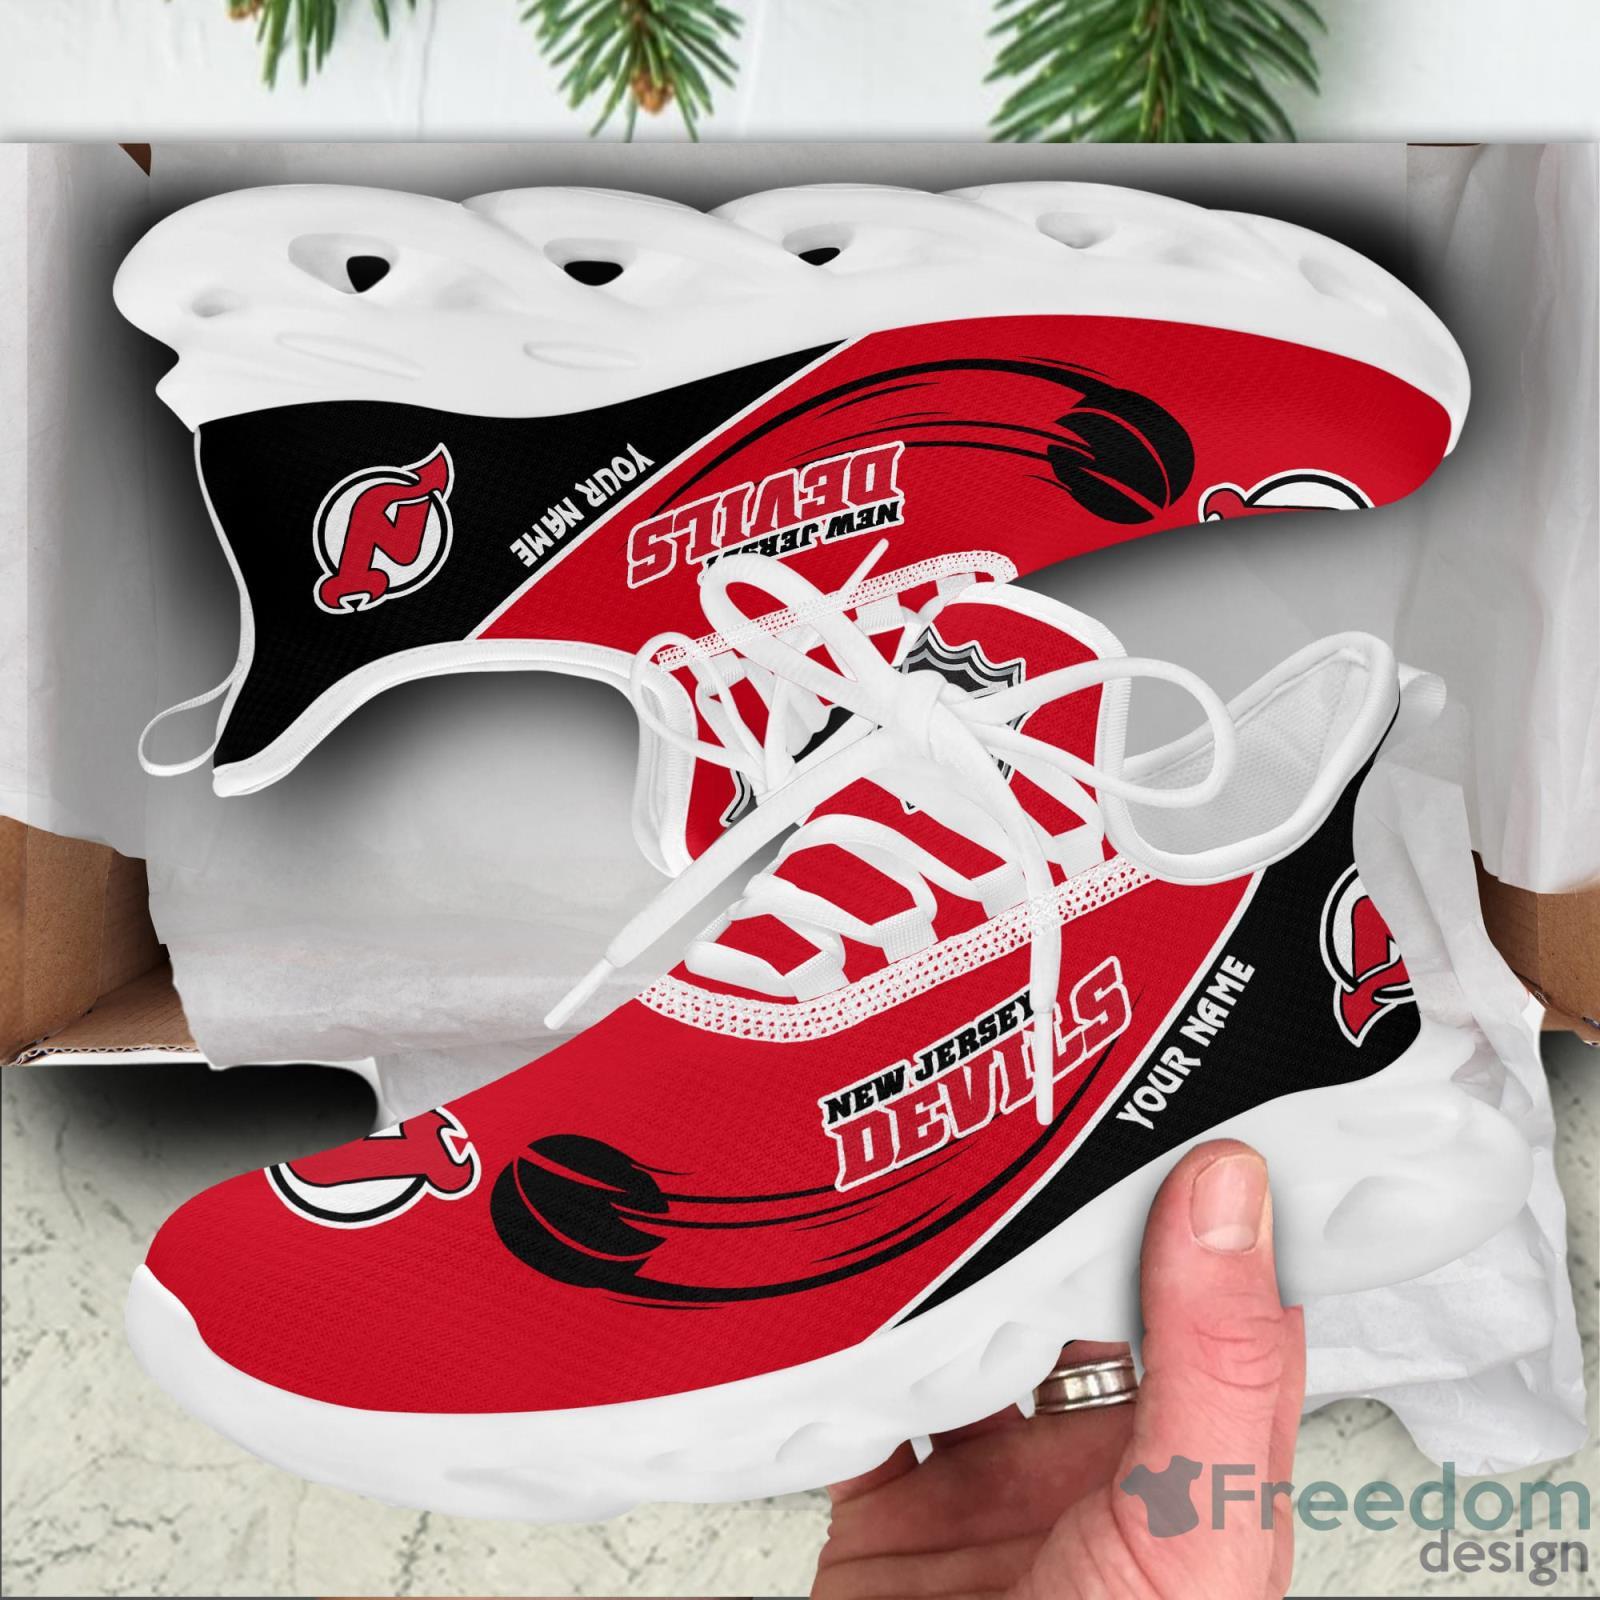 New Jersey Devils-Custom Name NHL New Max Soul Shoes Best Gift For Men And  Women Fans - YesItCustom